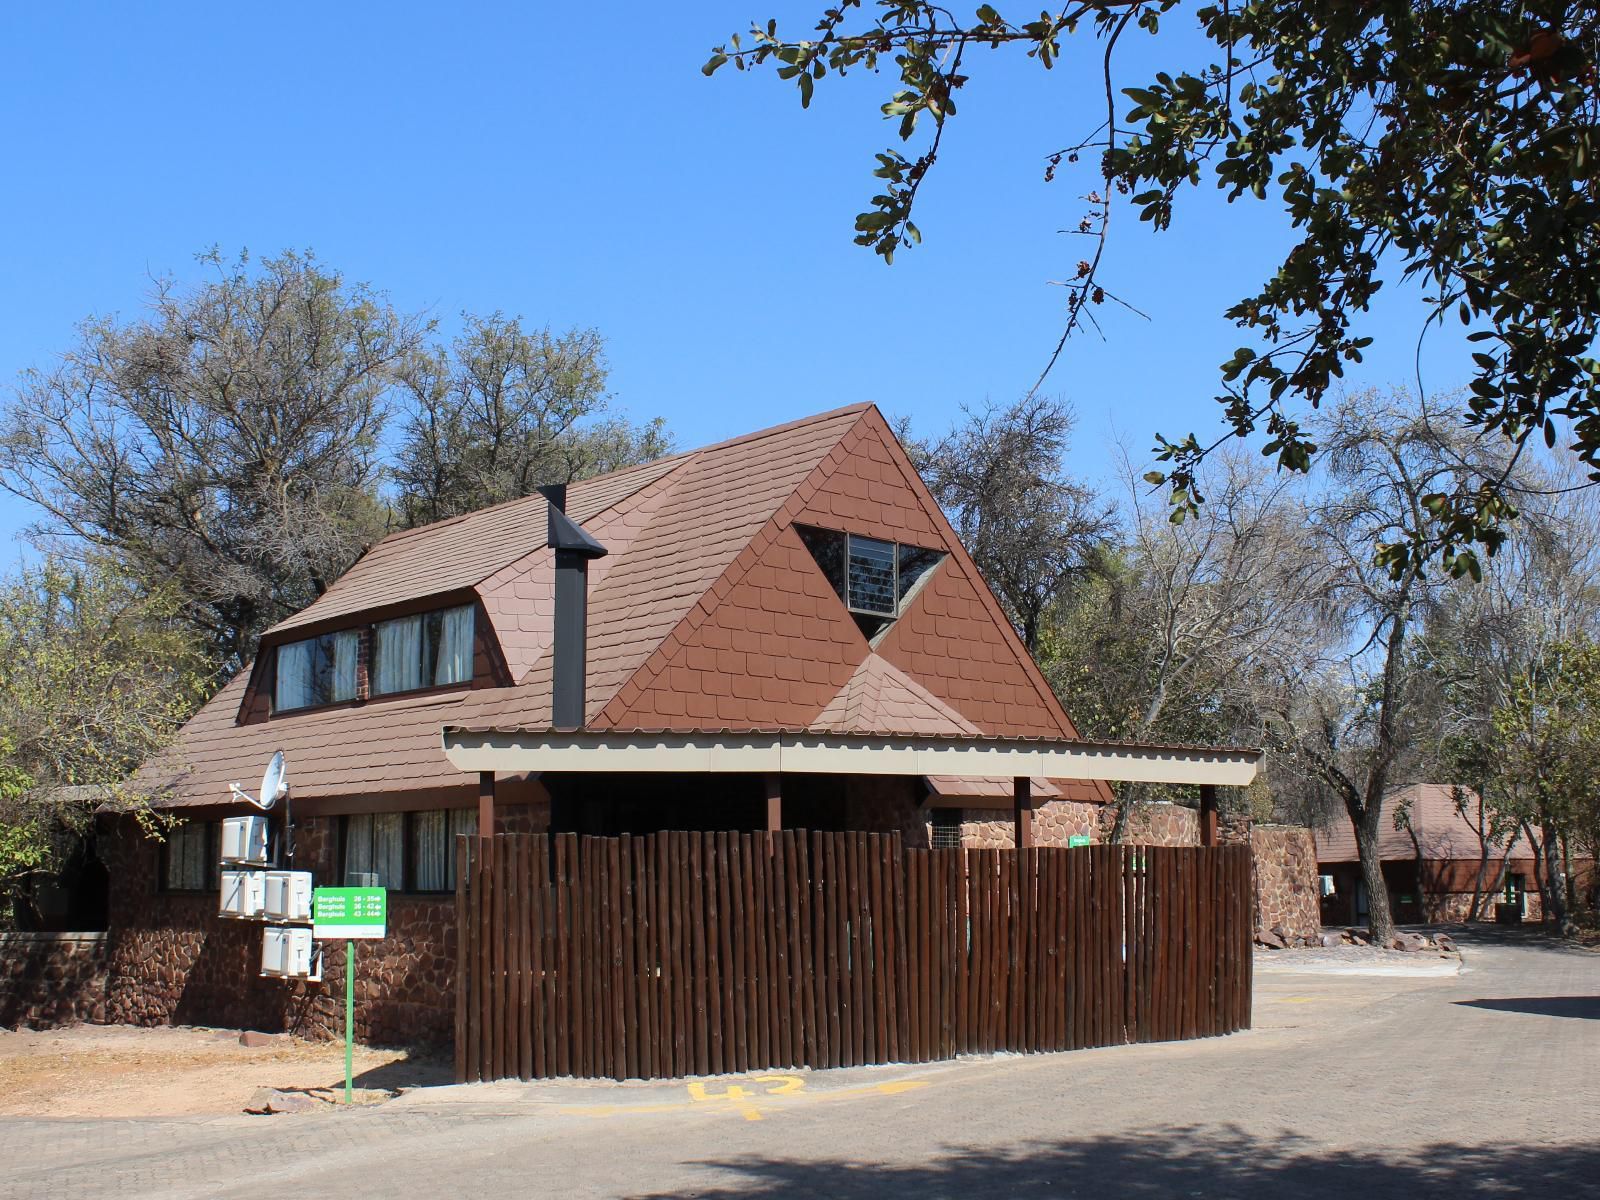 Atkv Klein Kariba Bela Bela Warmbaths Limpopo Province South Africa Building, Architecture, House